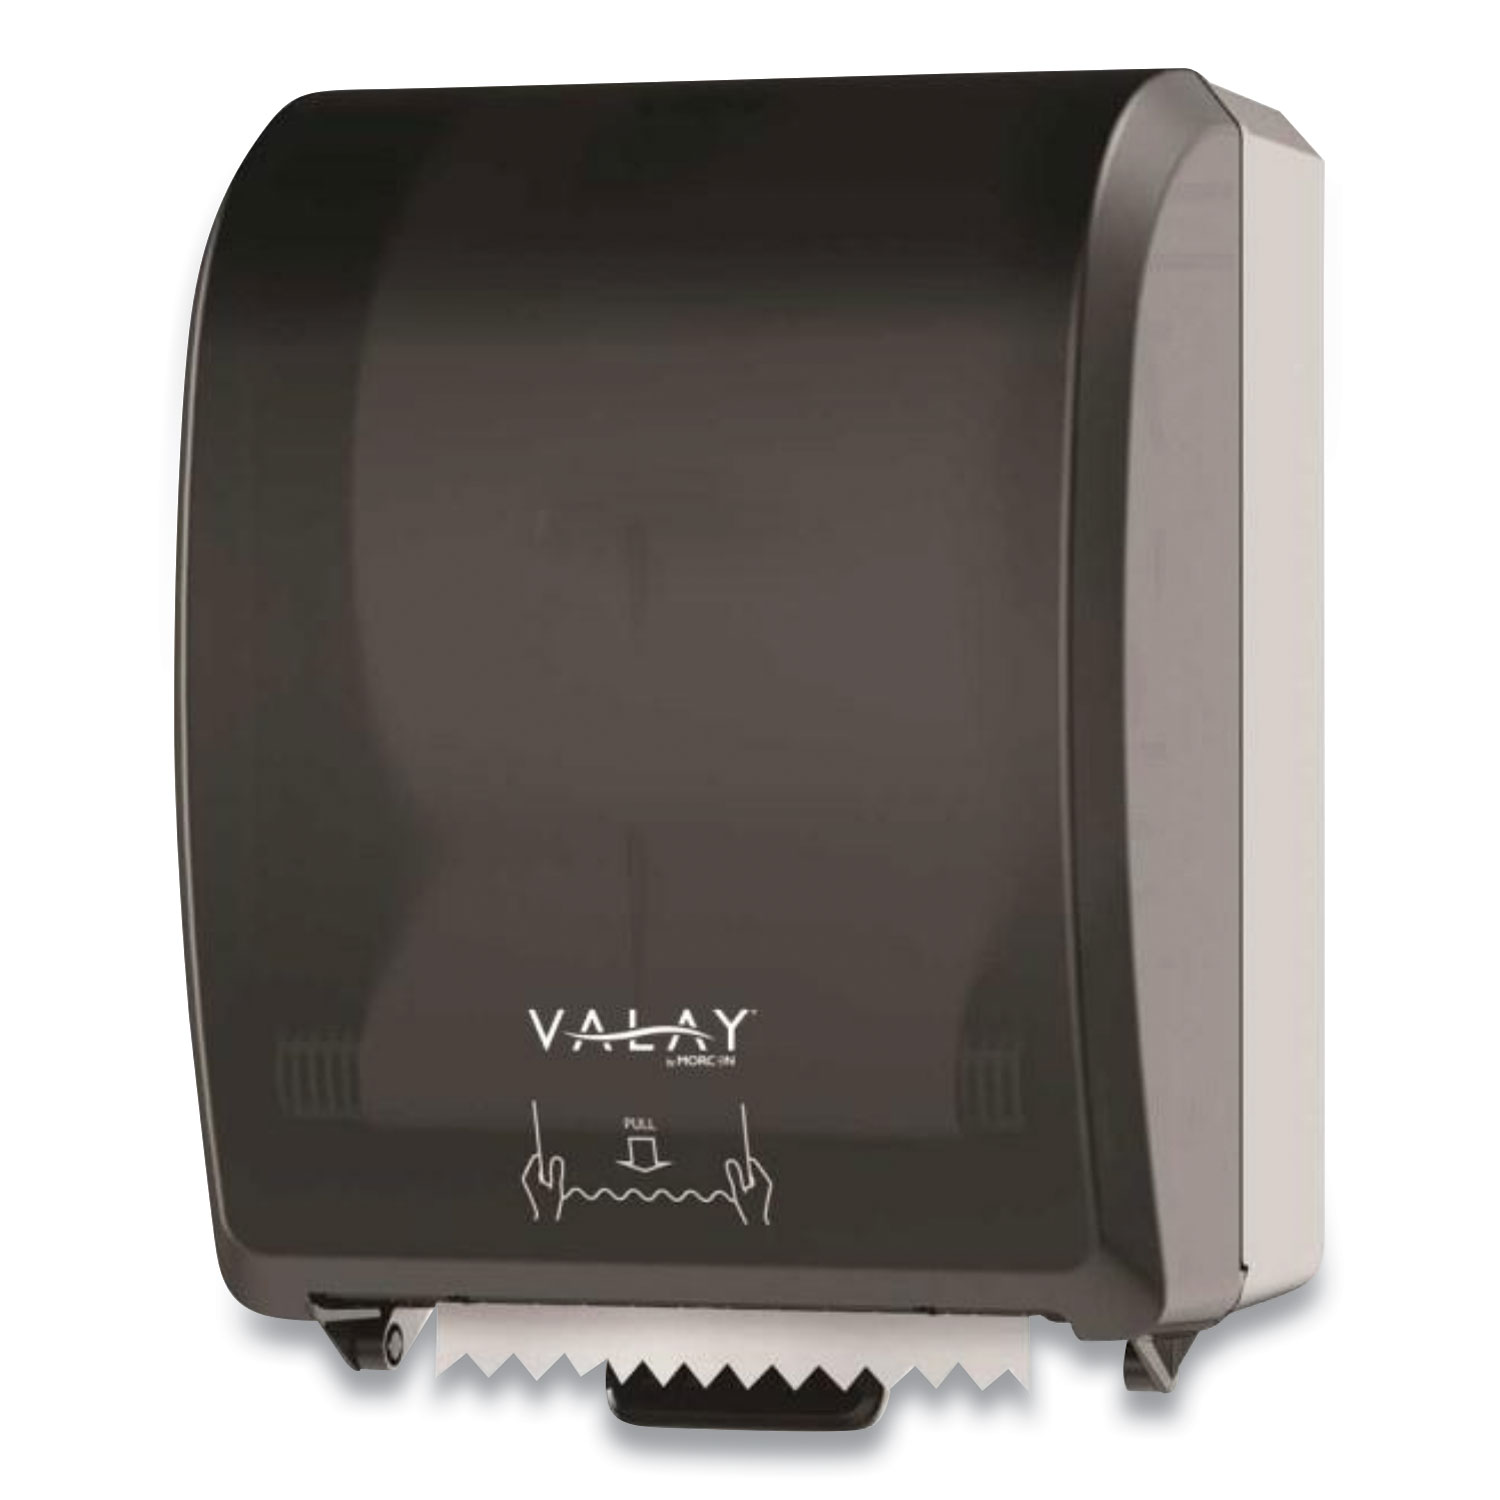  Morcon Tissue I8000 Valay Controlled Towel Dispenser, I-Notch, 12.3 x 9.3 x 15.9, Black (MORI8000) 